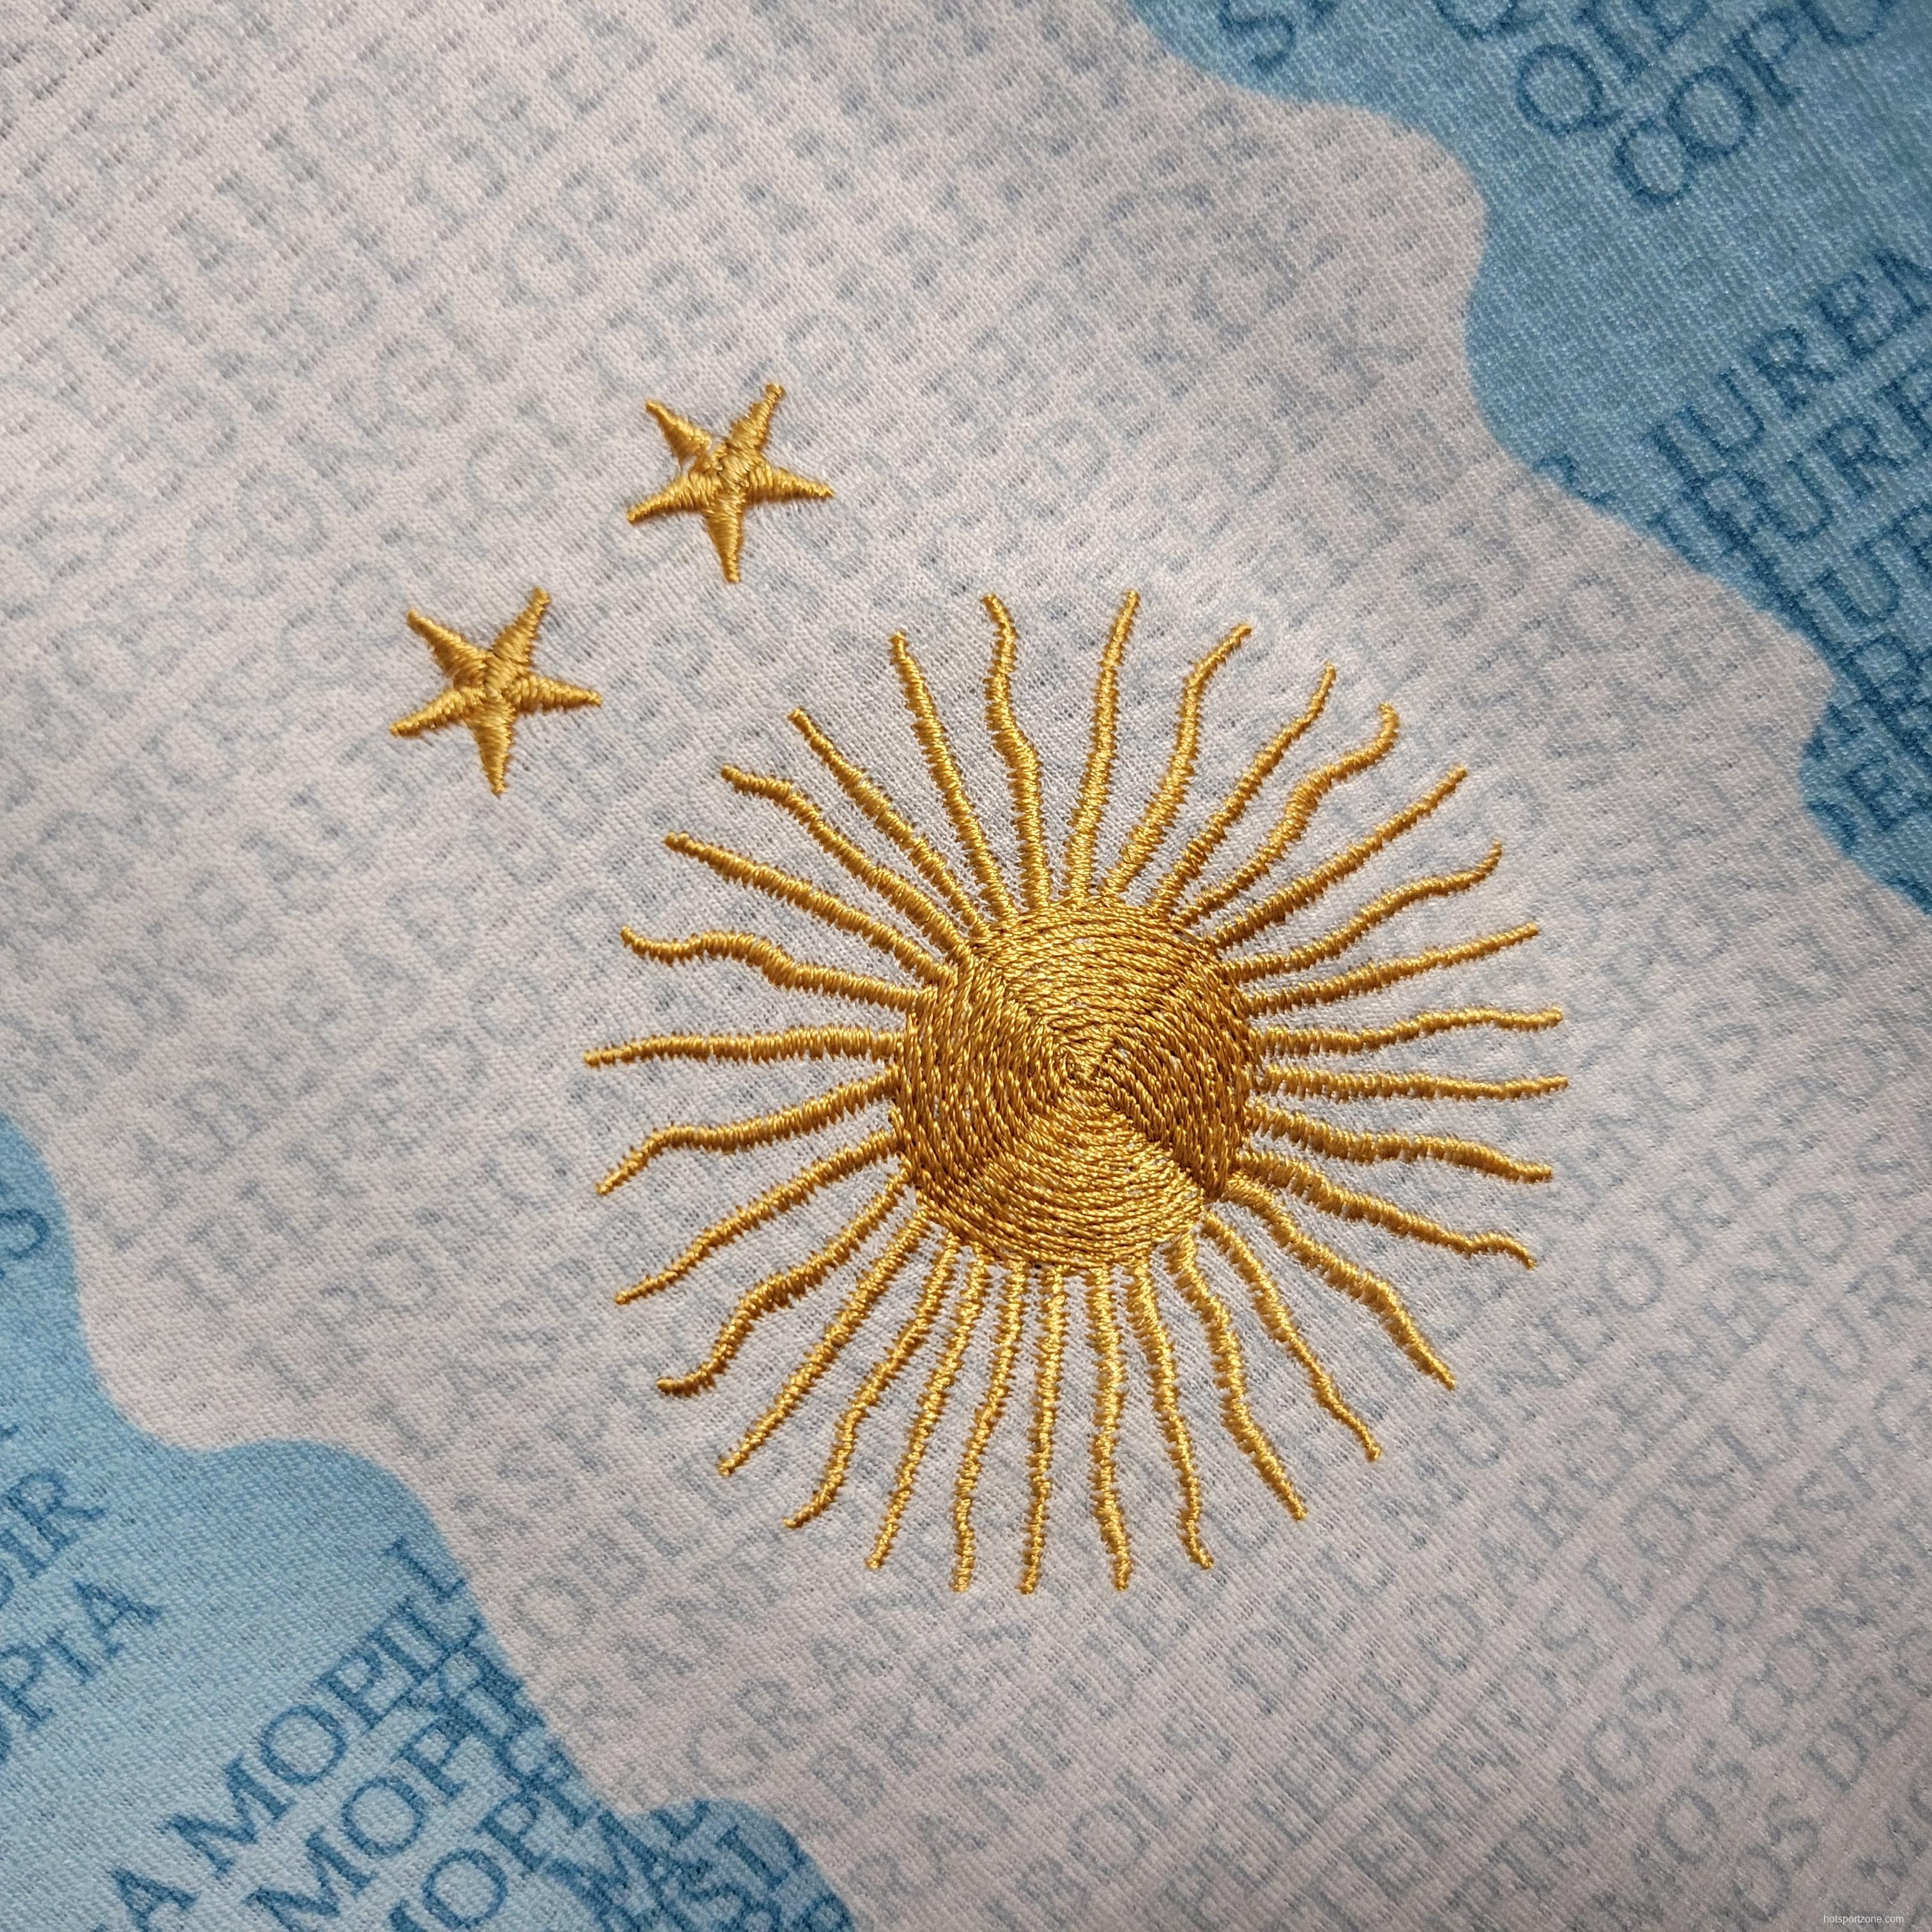 2022 Argentina Commemorative Edition